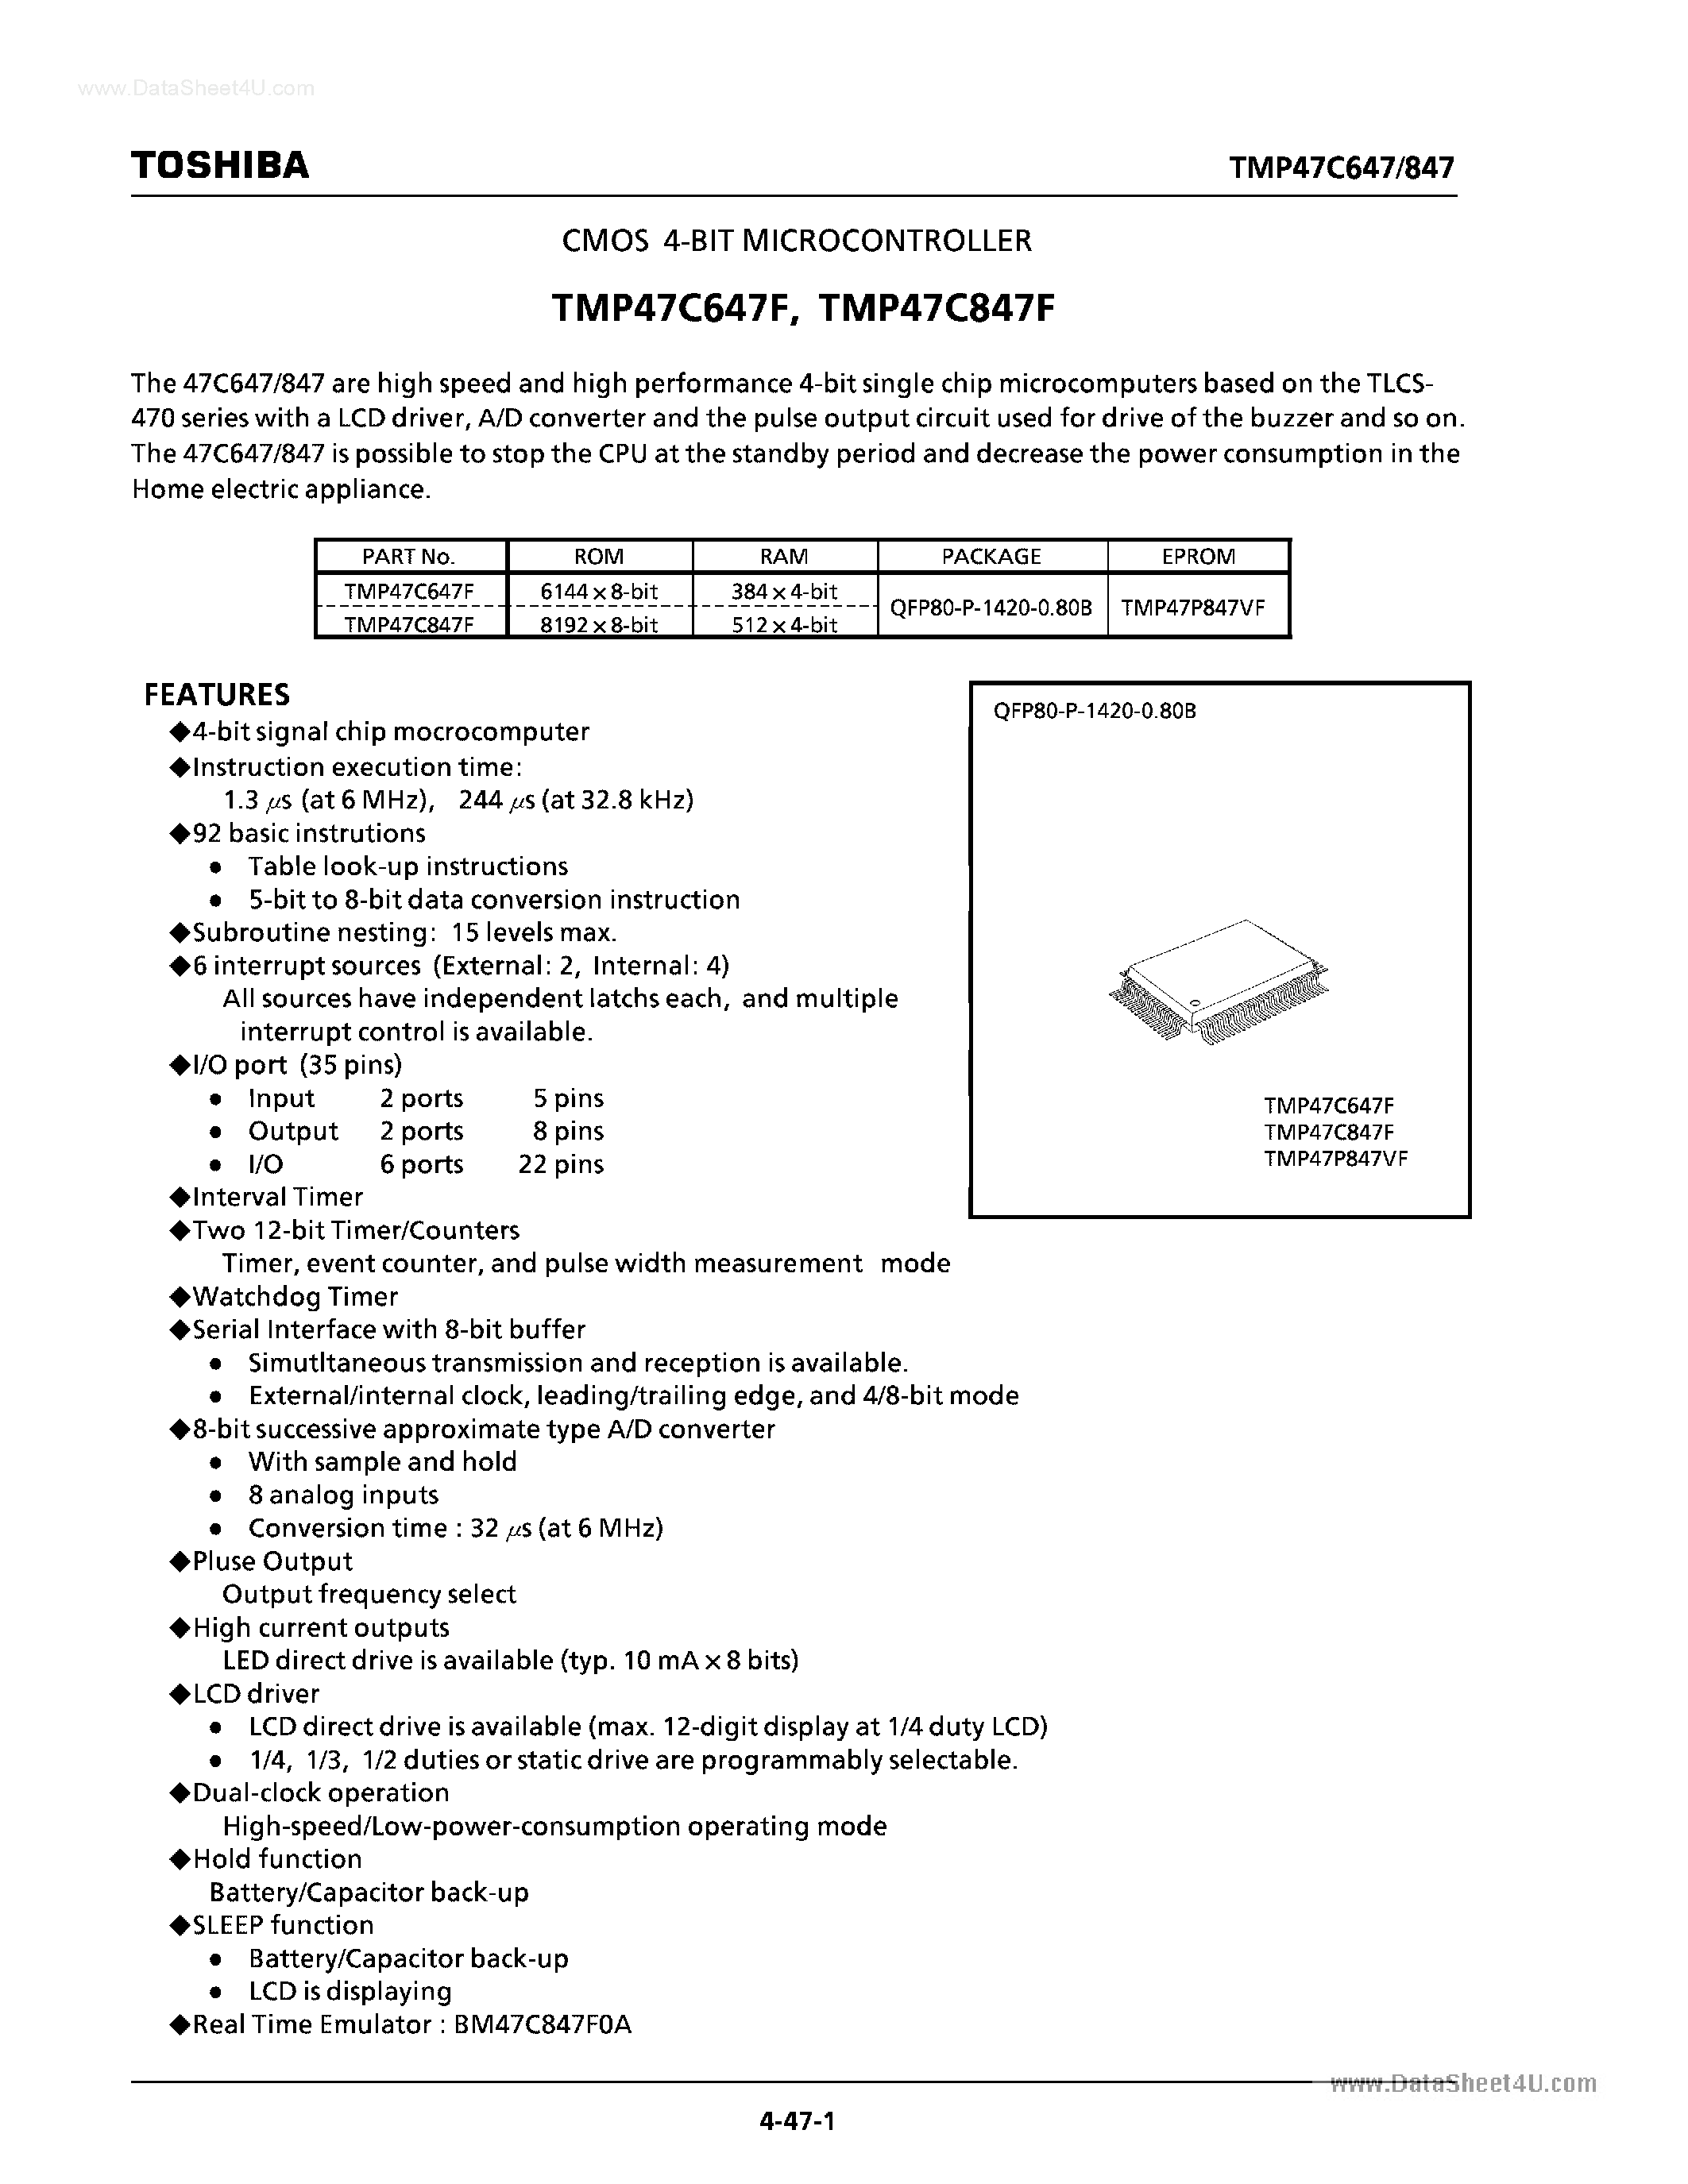 Даташит TMP47C647F - (TMP47C647F / TMP47C847F) CMOS 4-bit Microcontroller страница 1